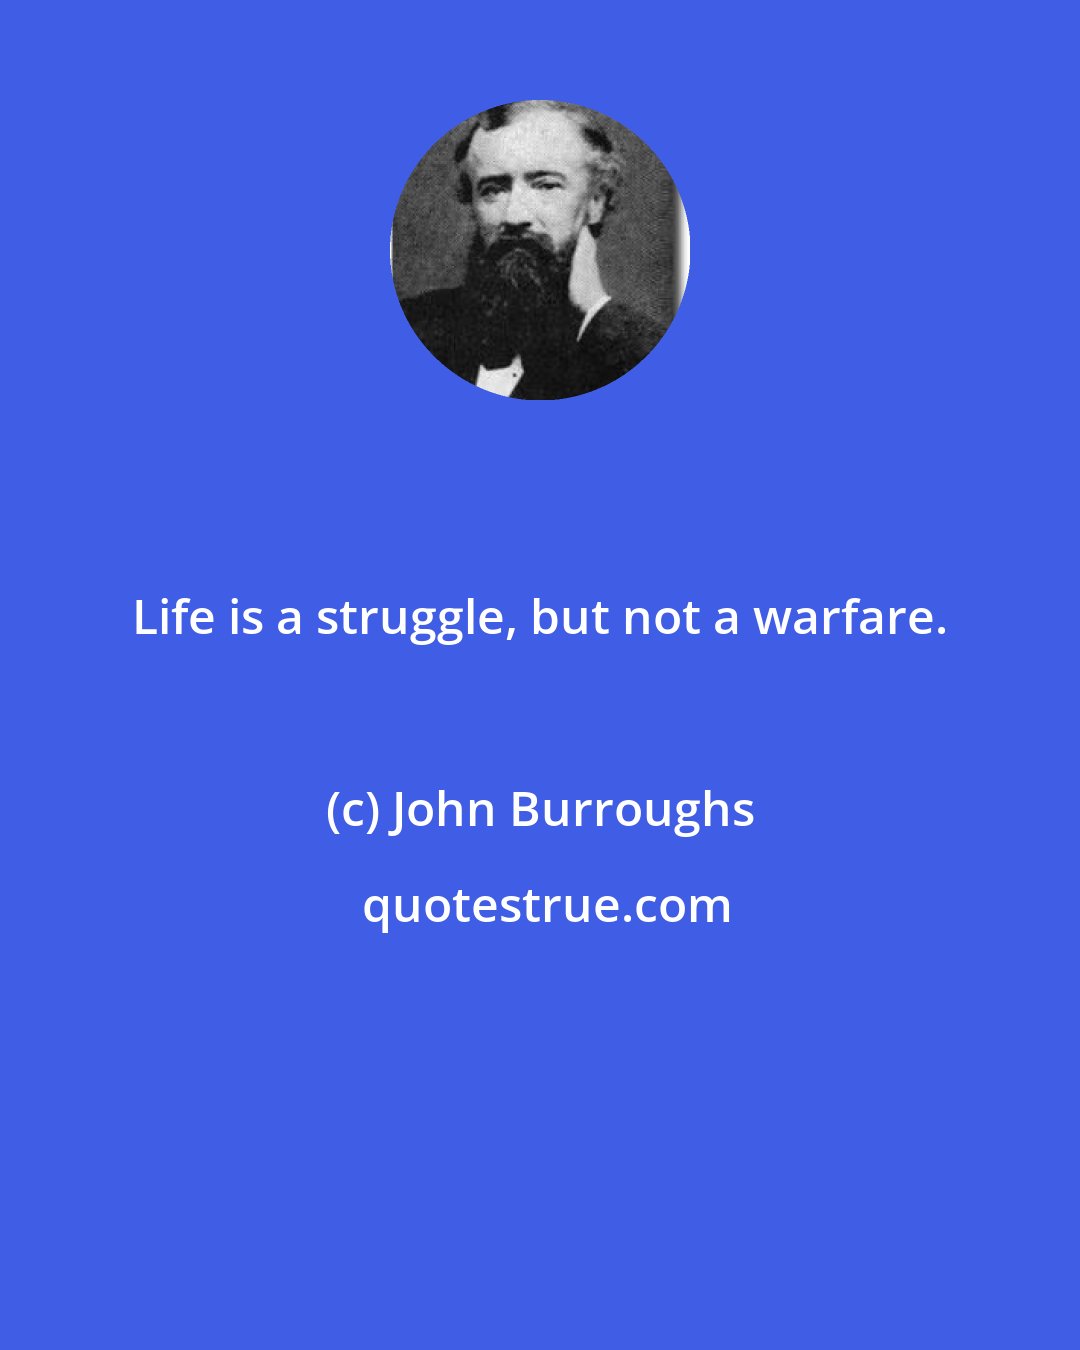 John Burroughs: Life is a struggle, but not a warfare.